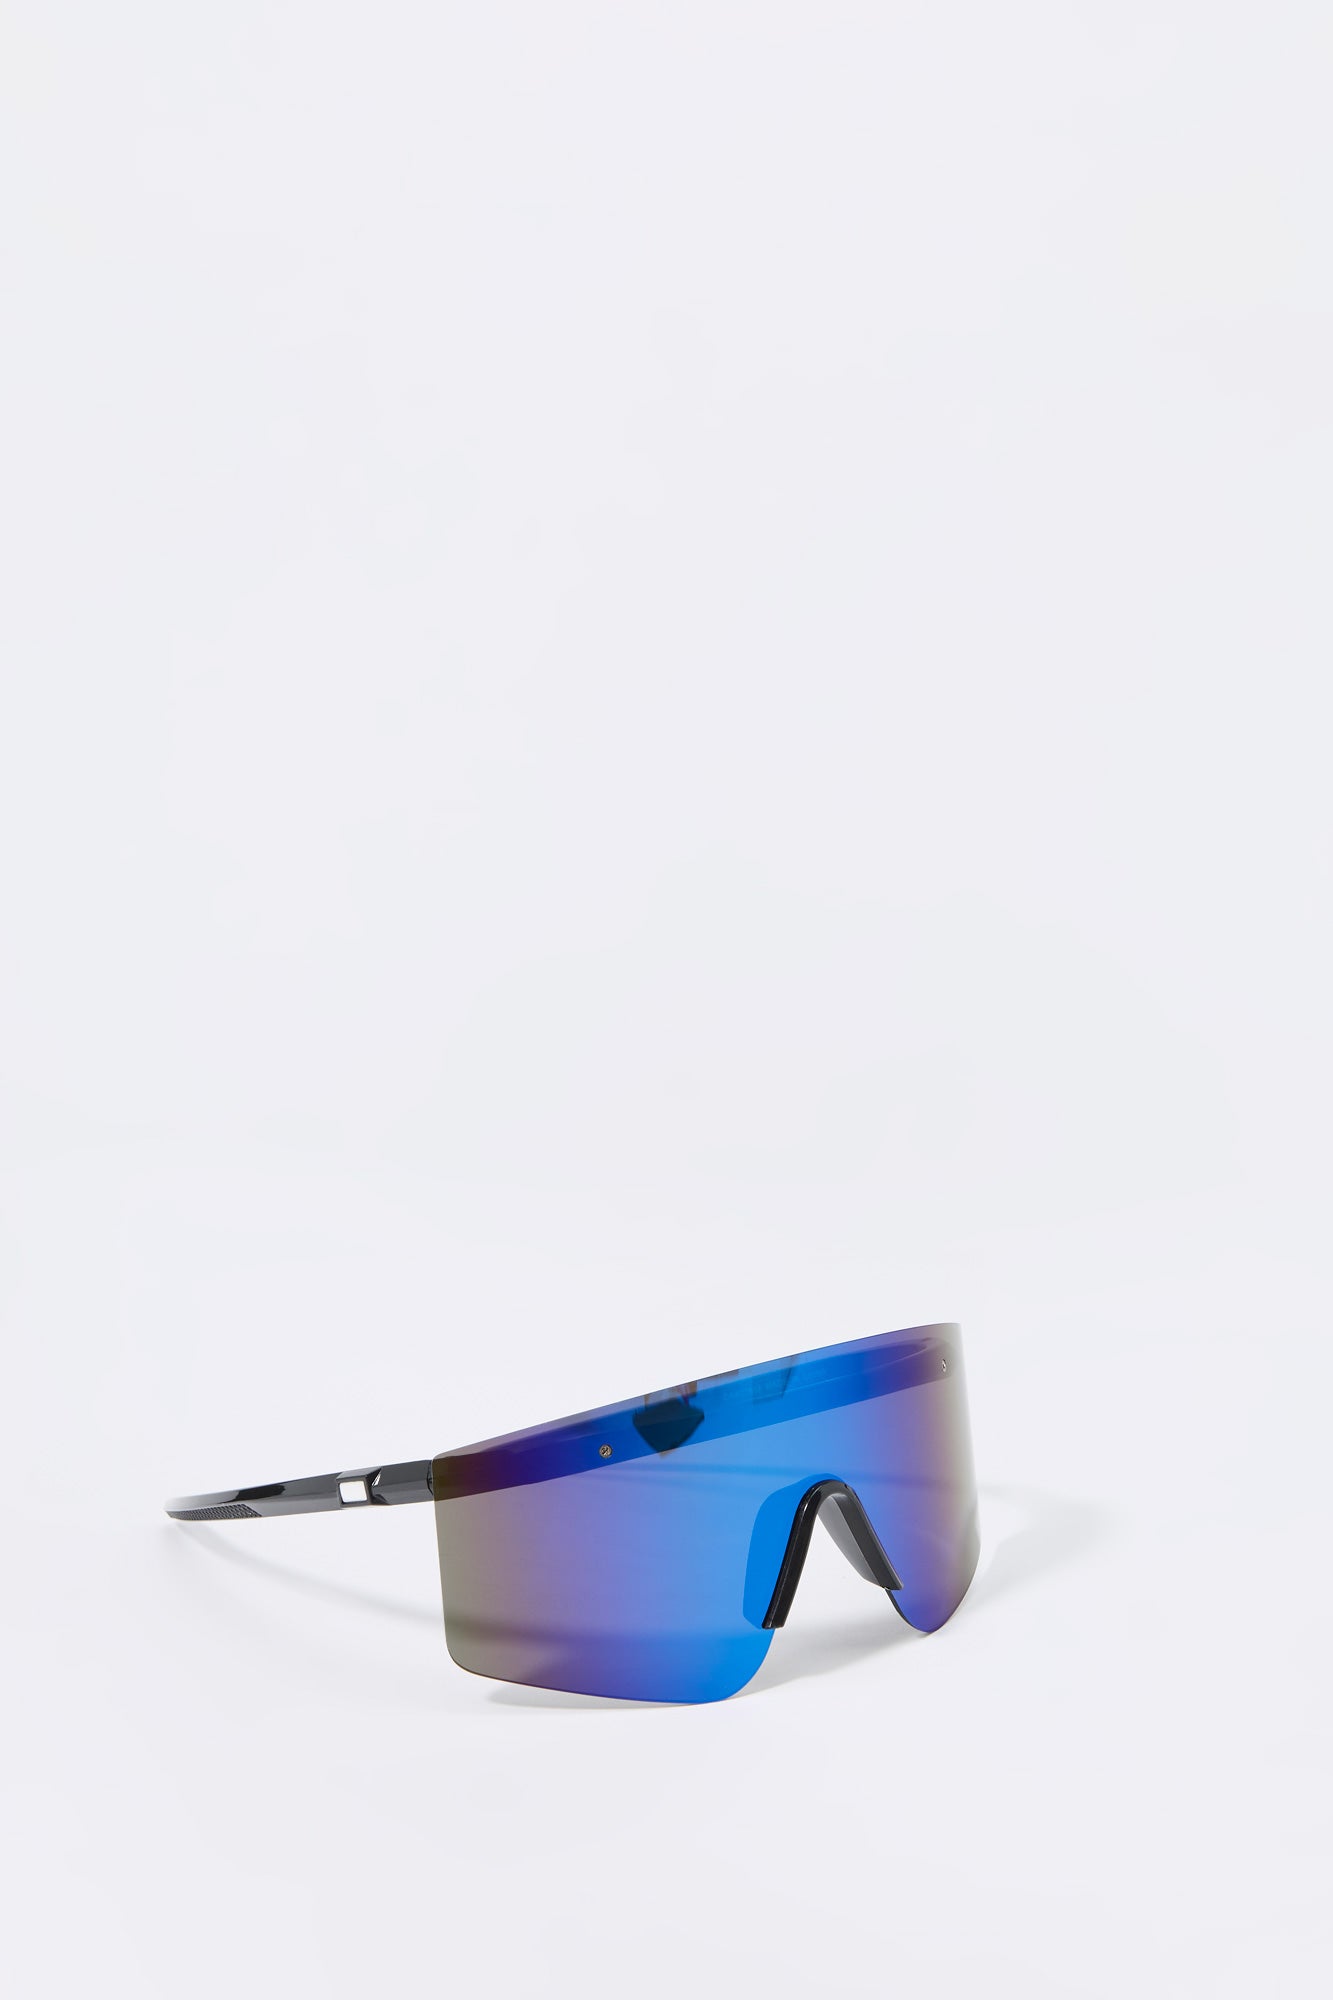 Soft Touch Rimless Shield Sunglasses